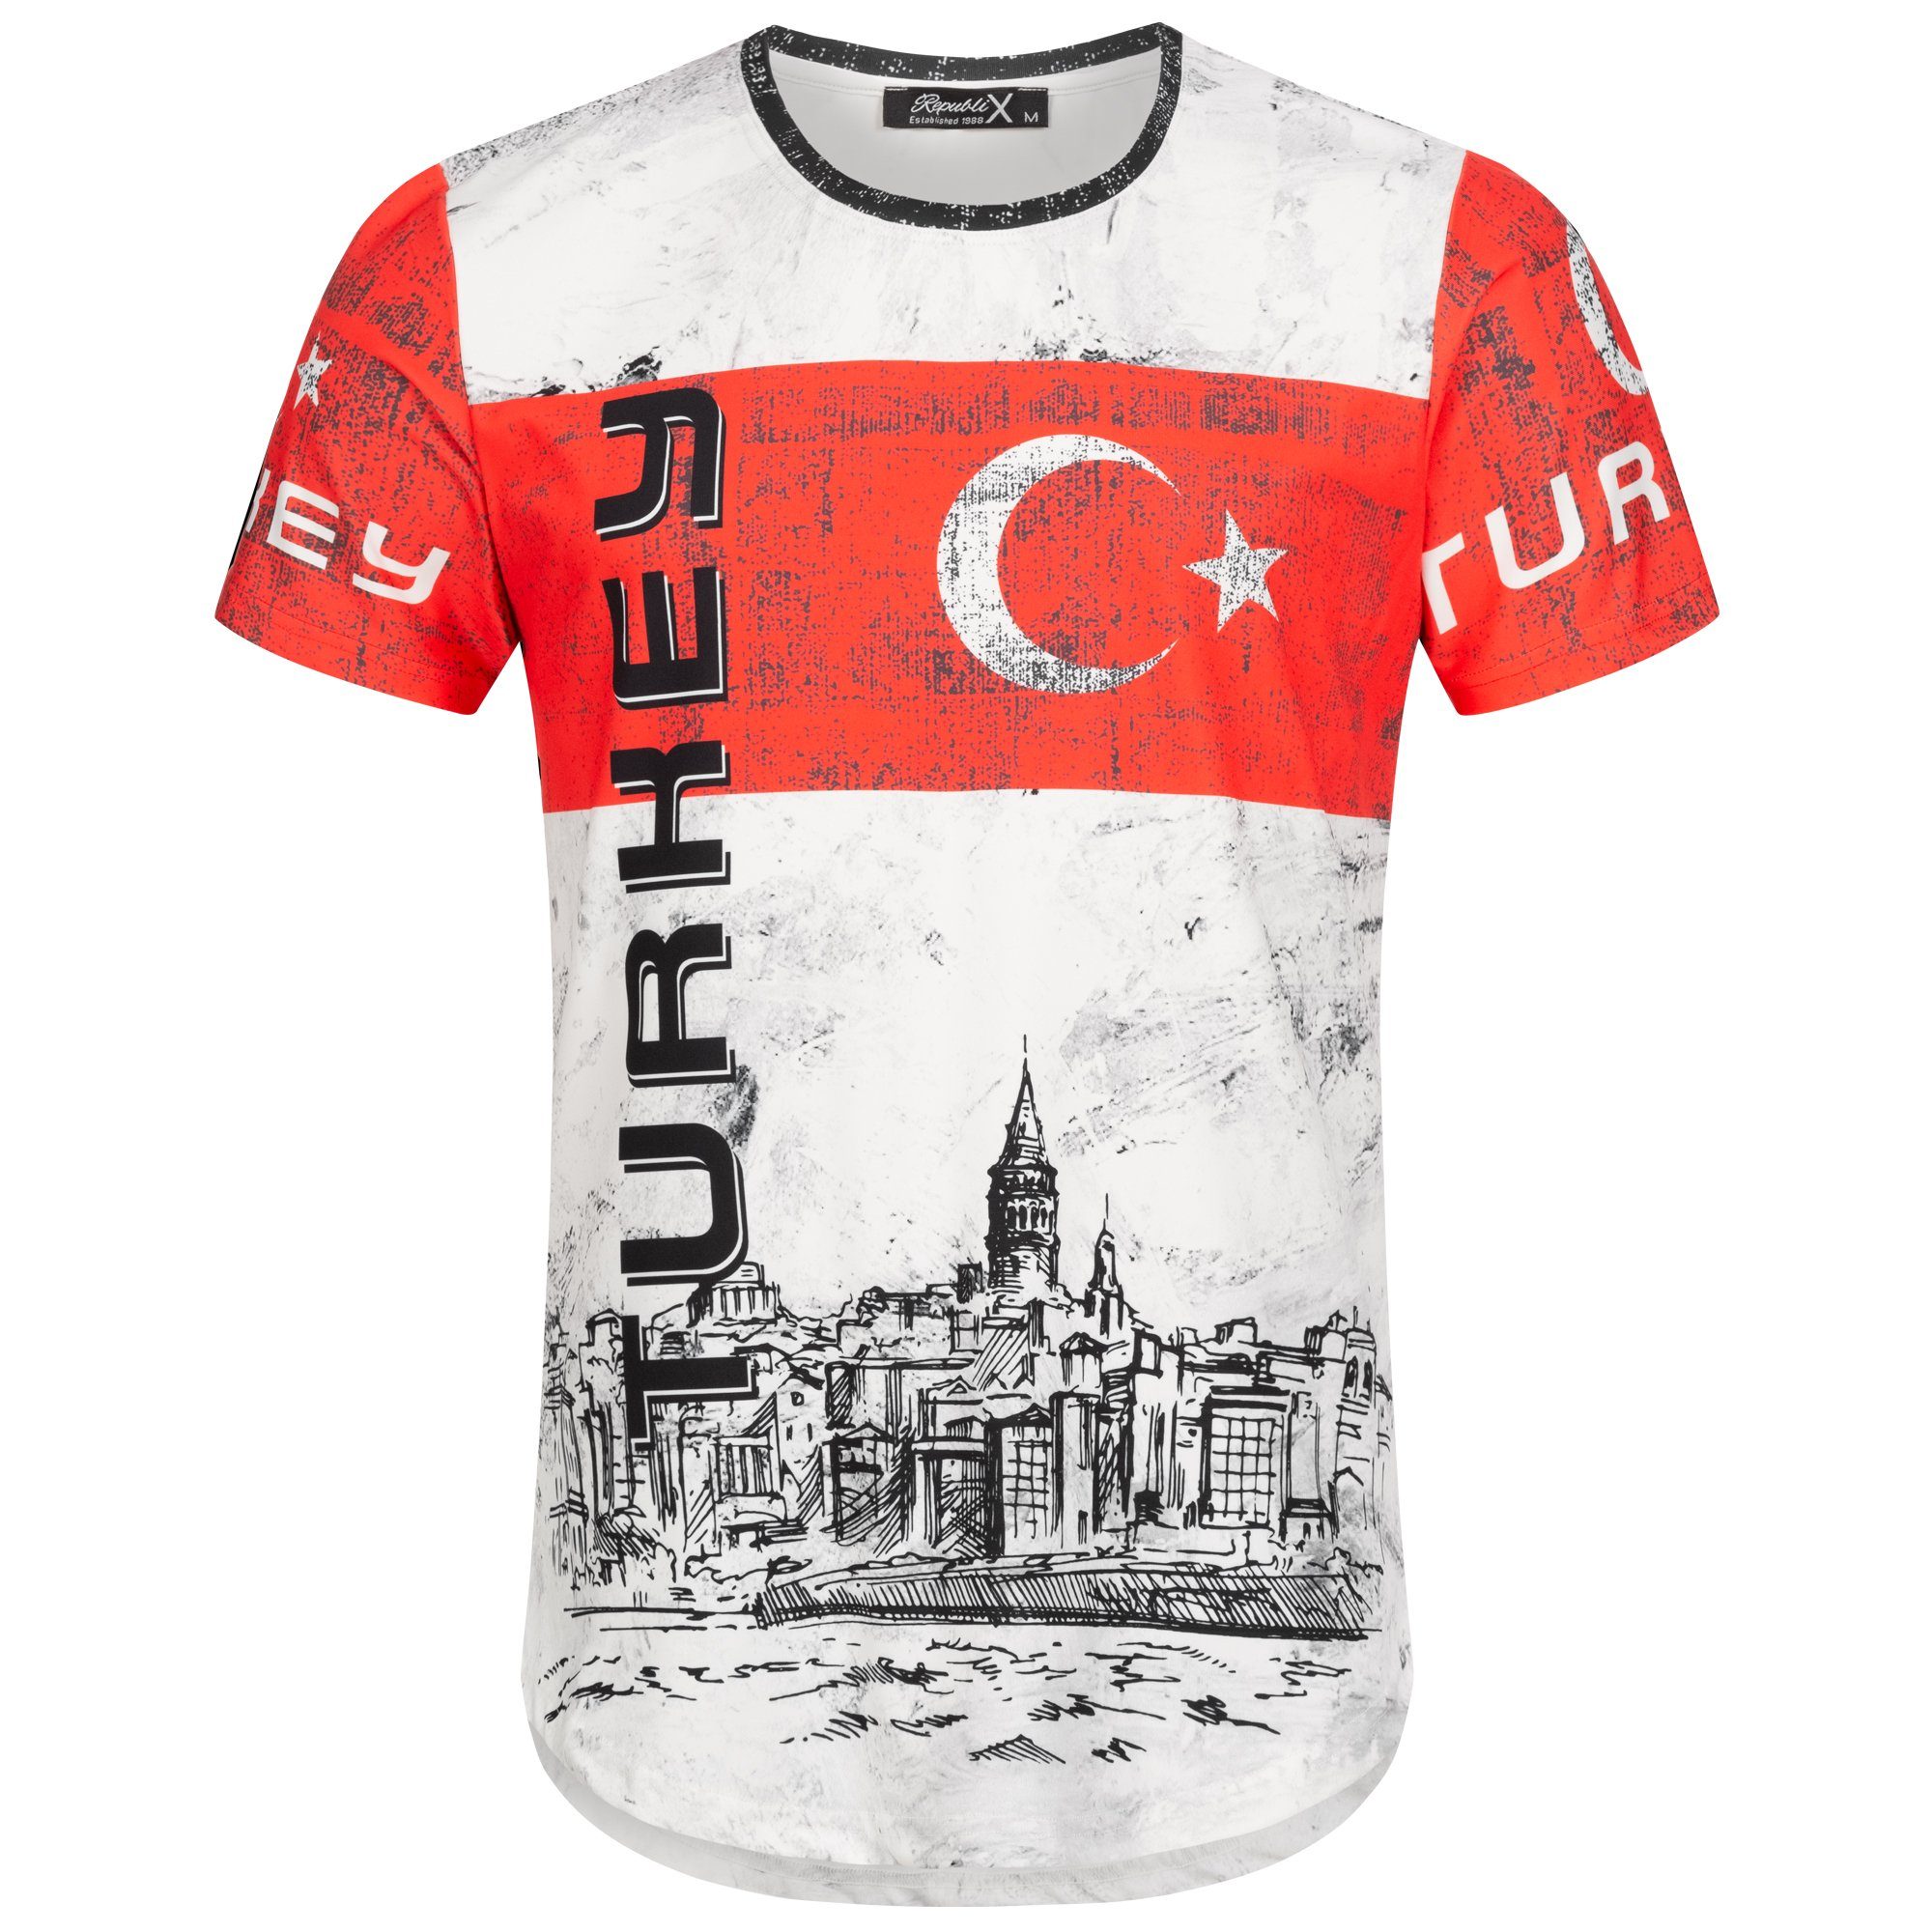 Crew WM FAN REPUBLIX mit Oversize EM Türkei Länder Herren Rundhalsausschnitt Neck T-Shirt Shirt